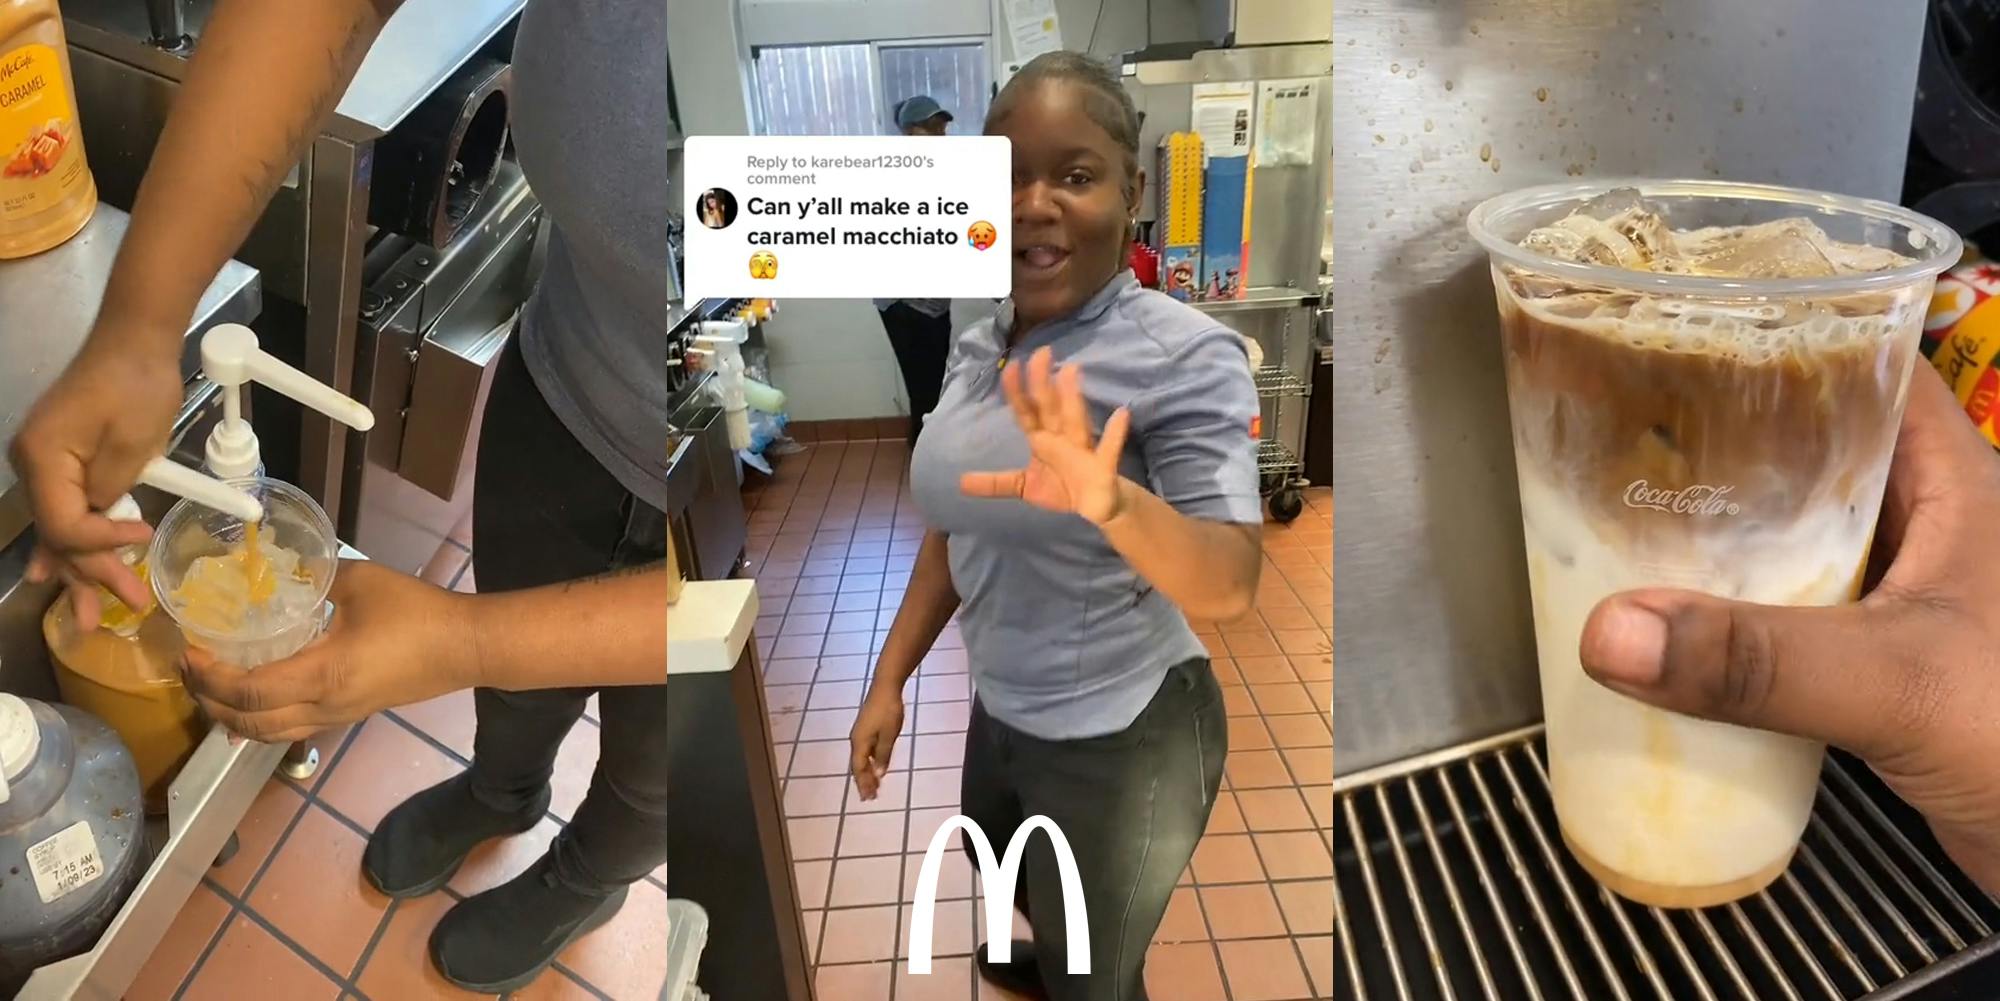 ‘Starbucks dupe’: McDonald’s customer shares how to make iced caramel macchiato